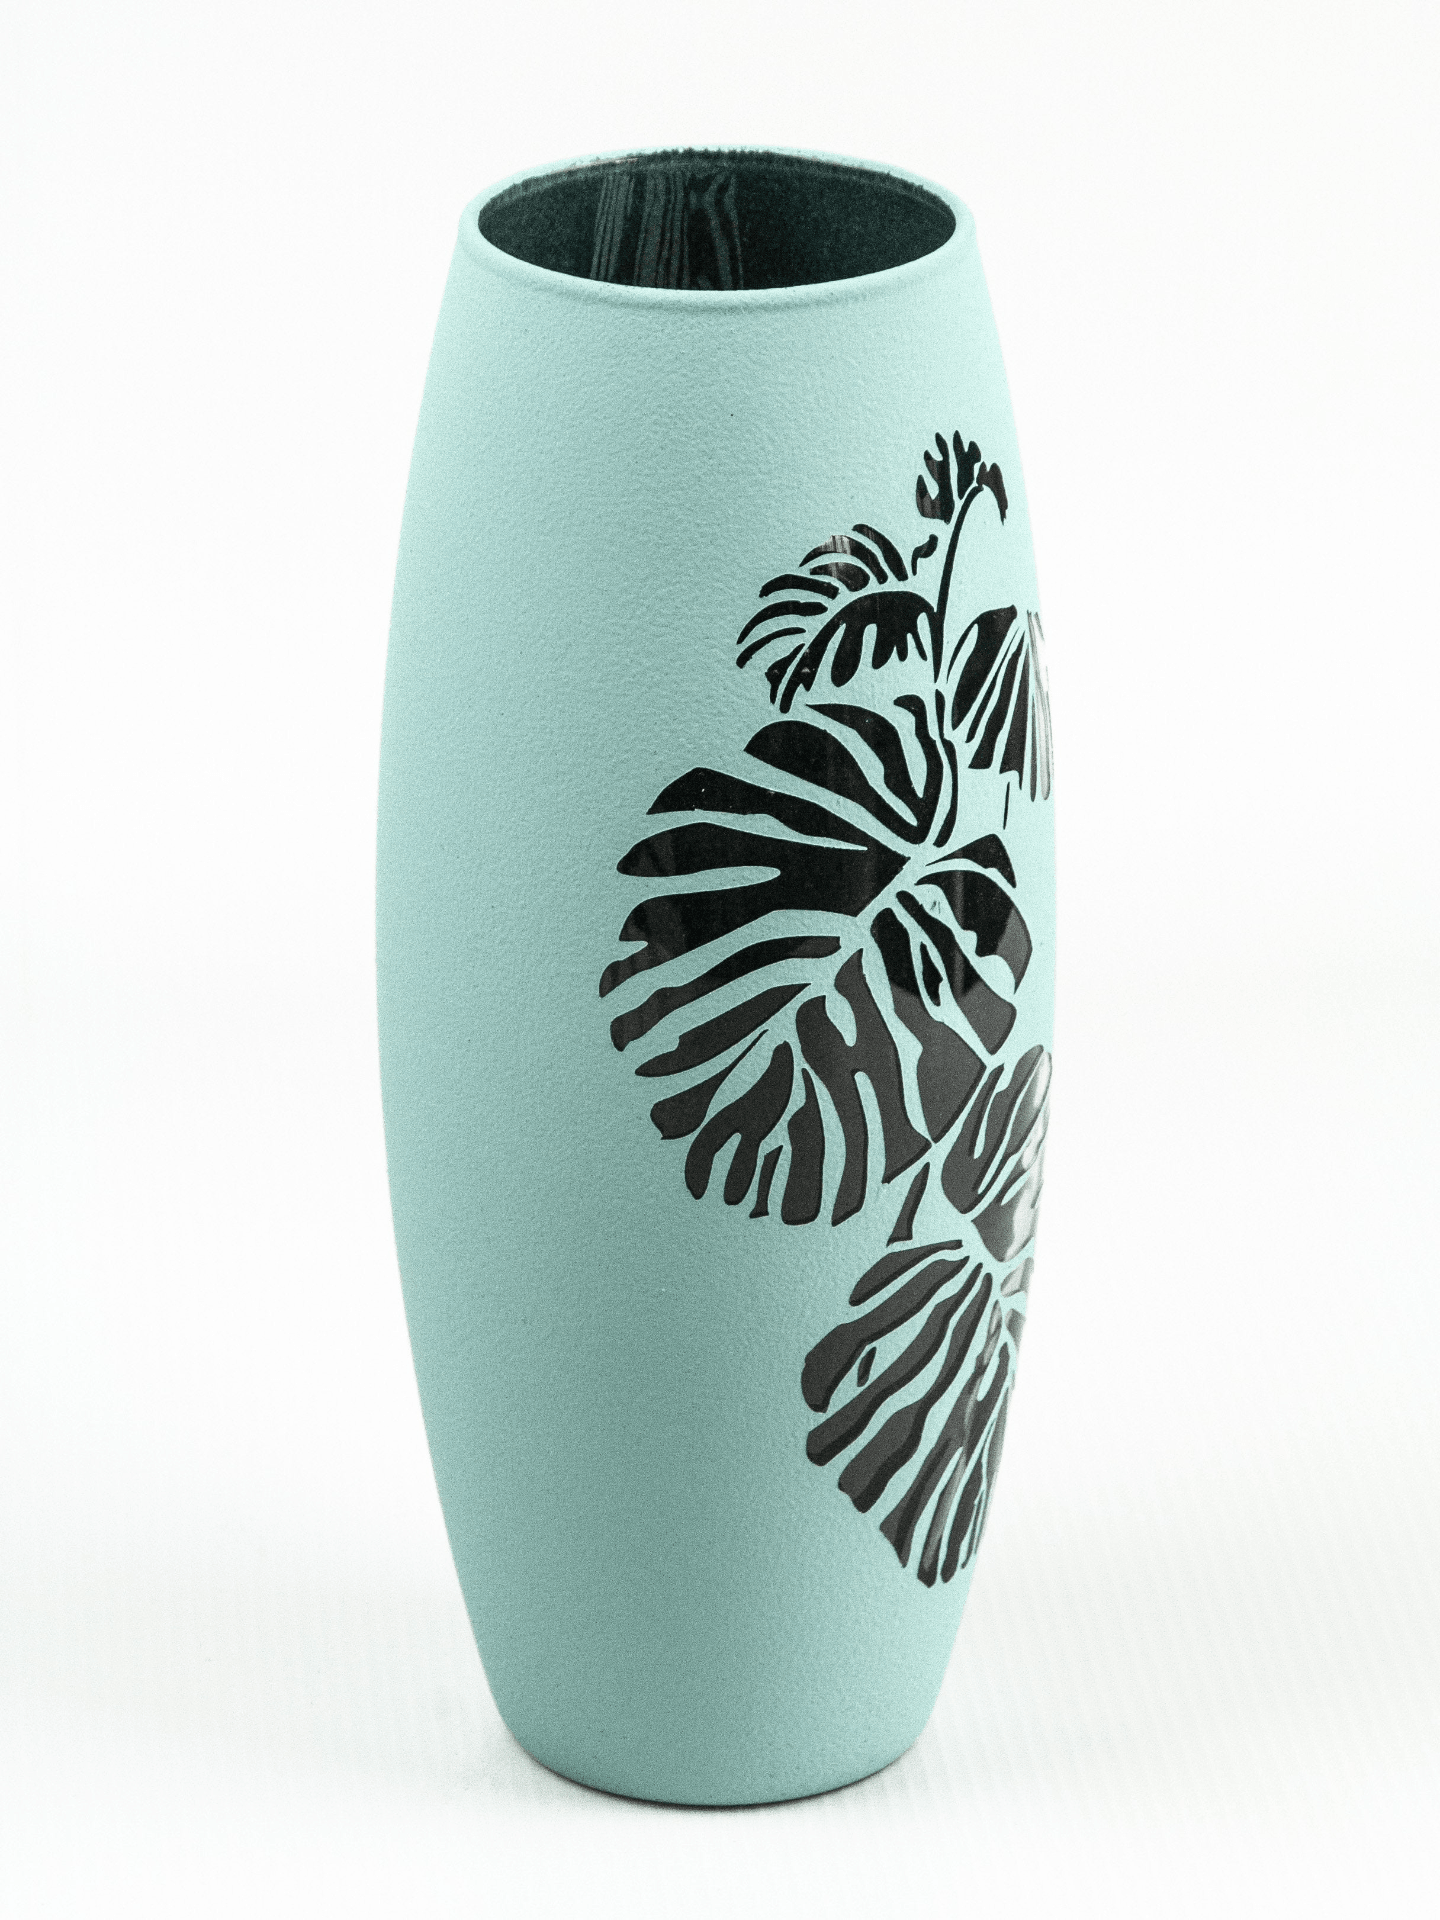 Blue Tropical Painted Art Glass Oval Vase for Flowers | Interior Design | Home Decor | Table vase | 7736/250/sh160.2  